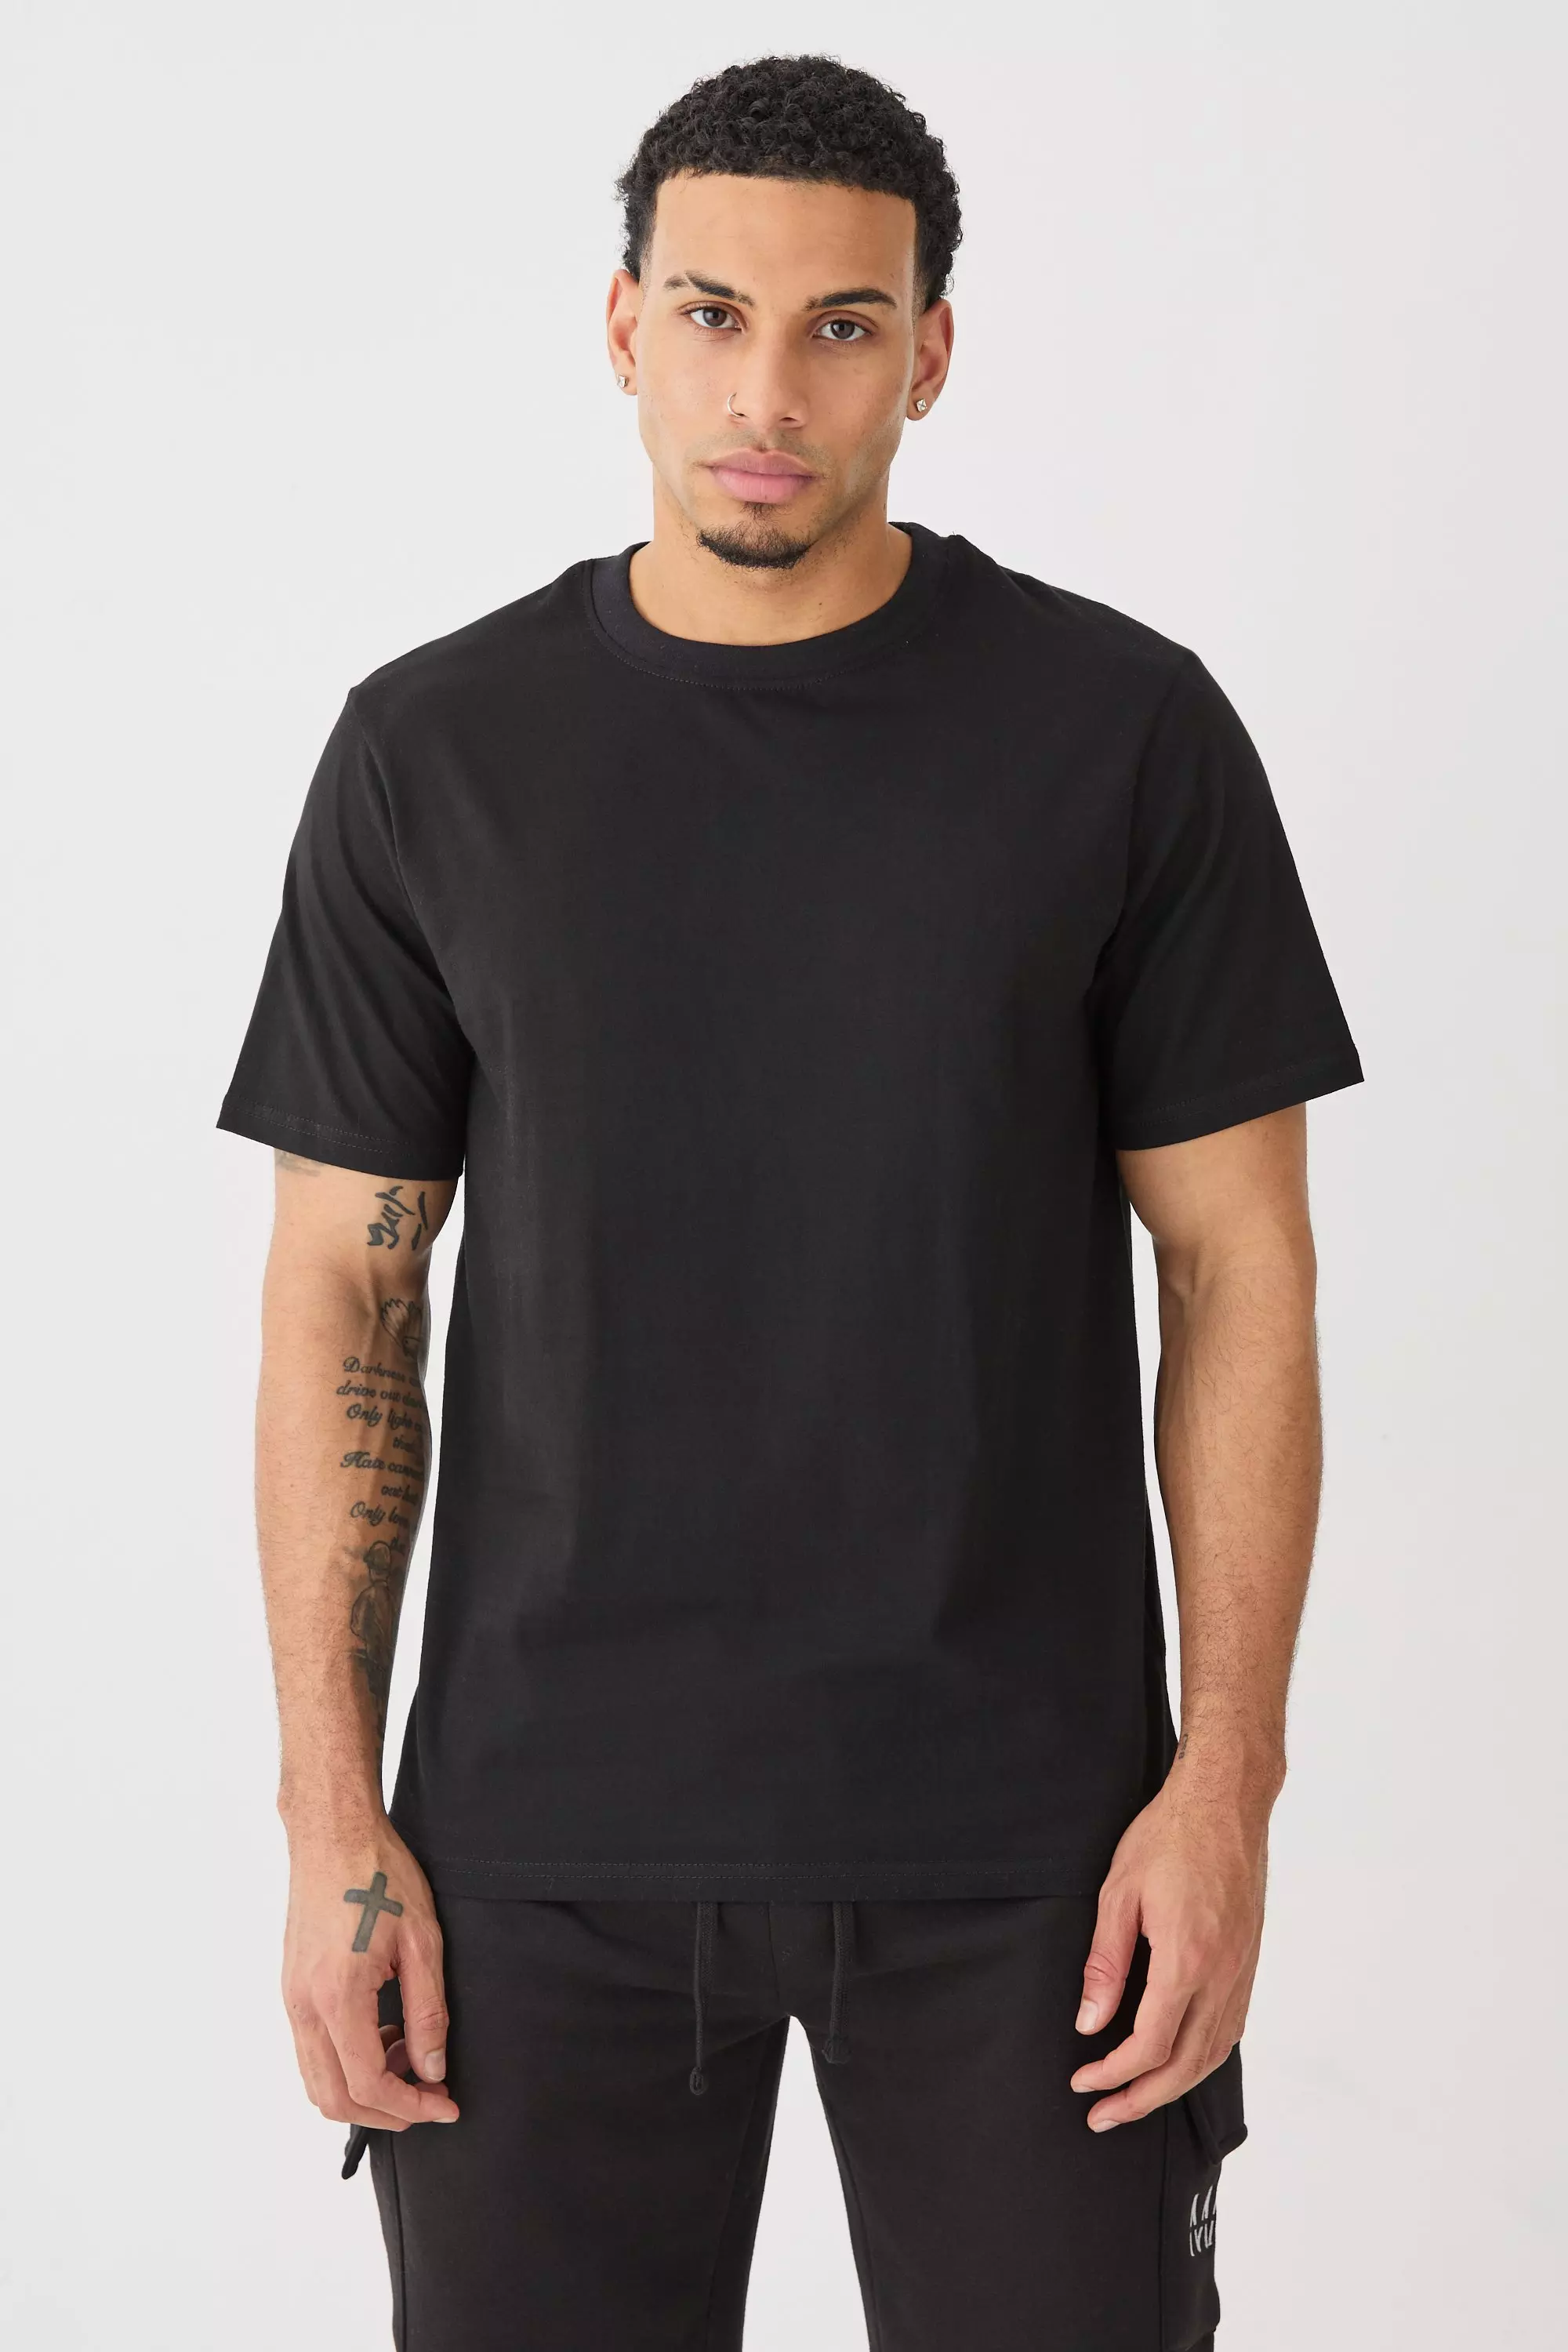 Basic Crew Neck T-shirt Black